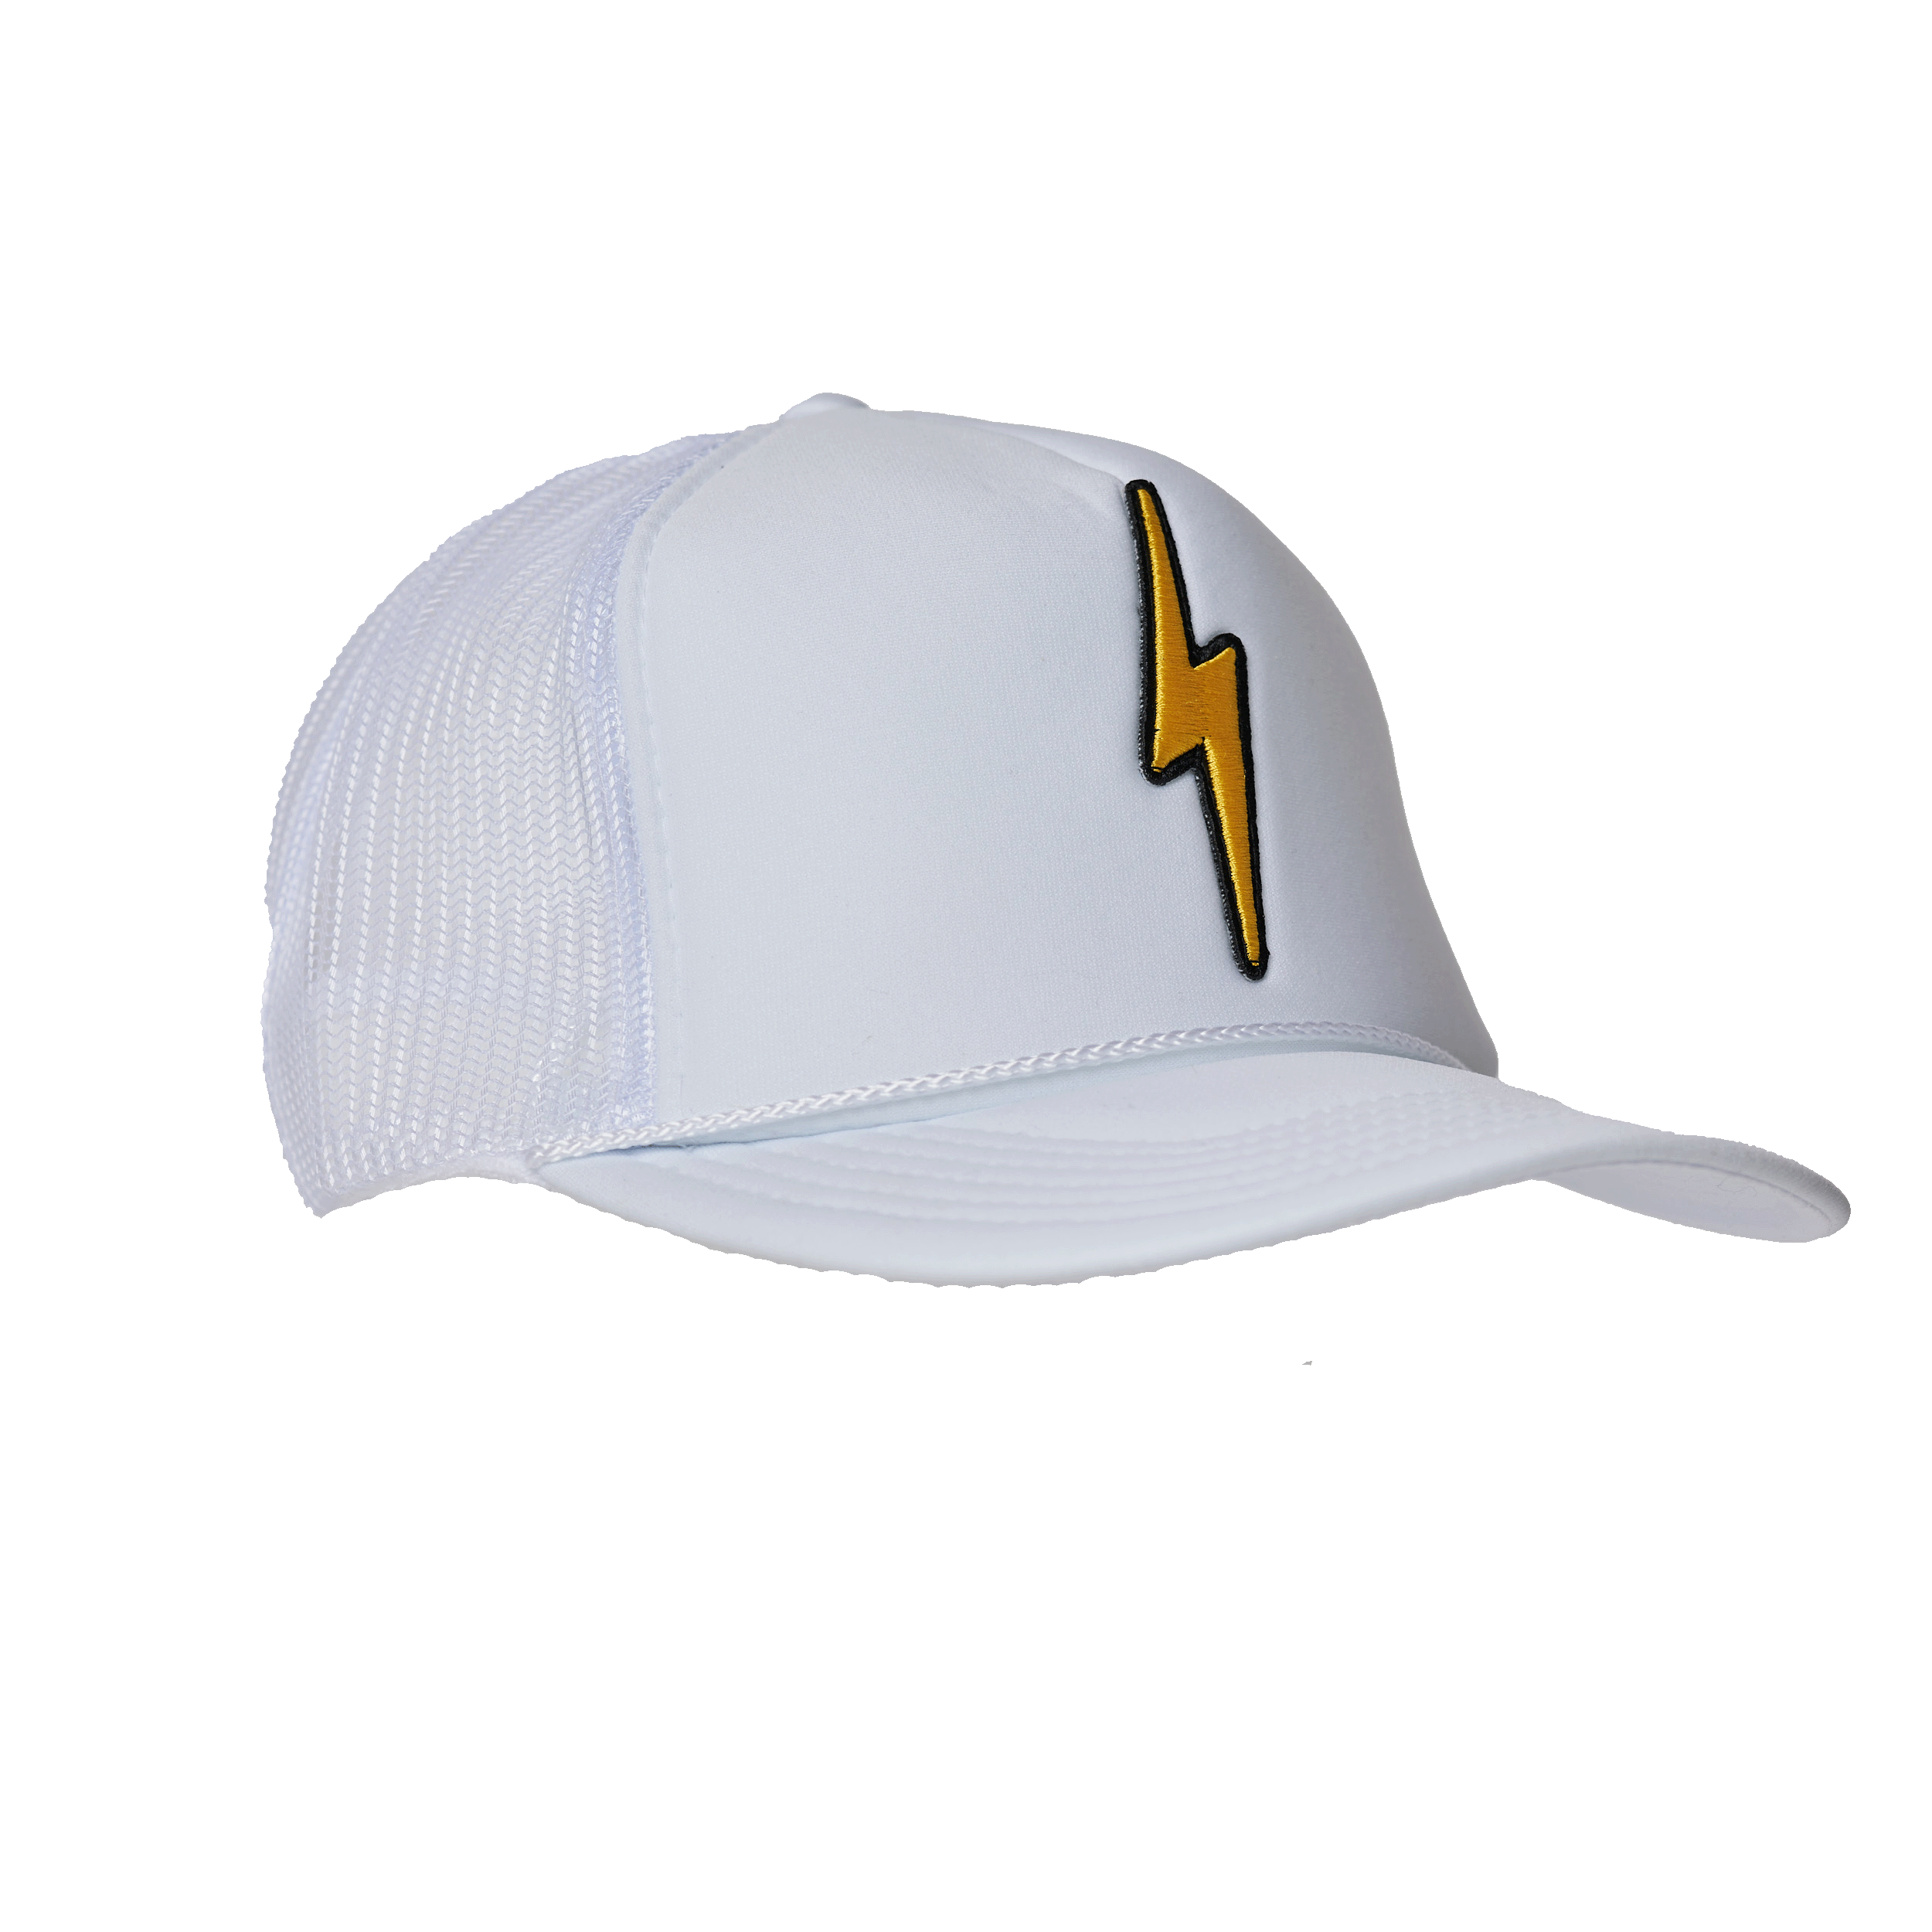 LIGHTNING BOLT hat by loma+pier hat store